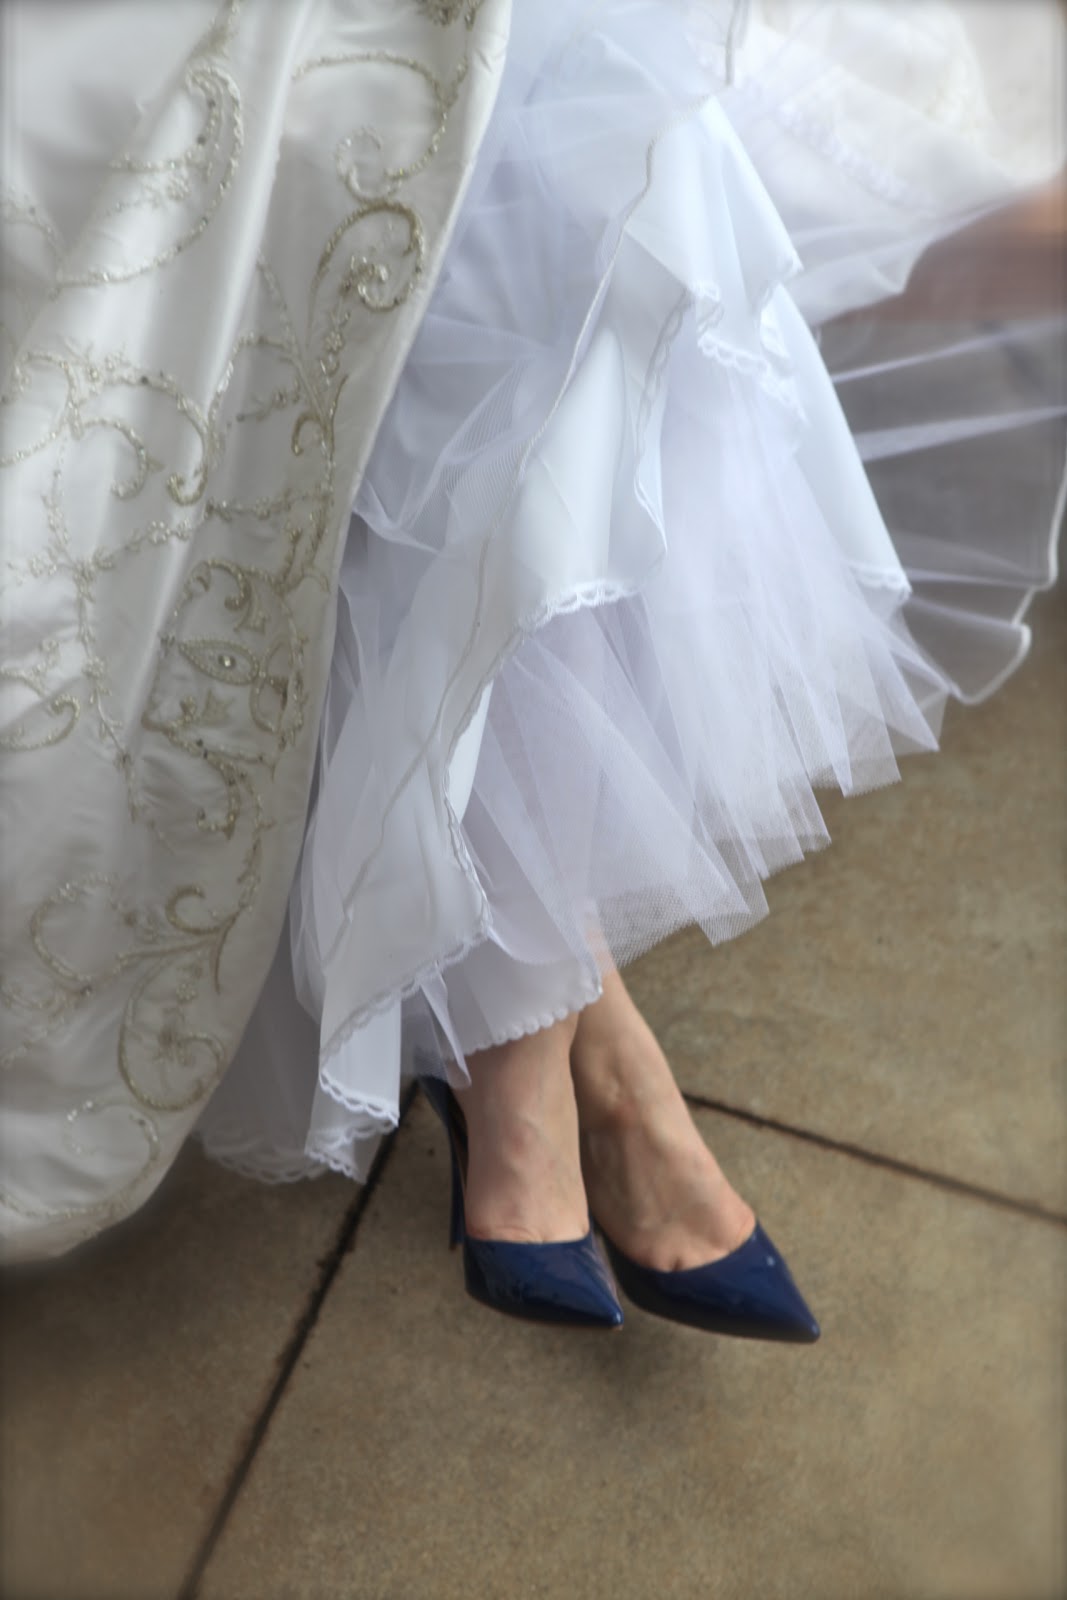 pink bridal shoes